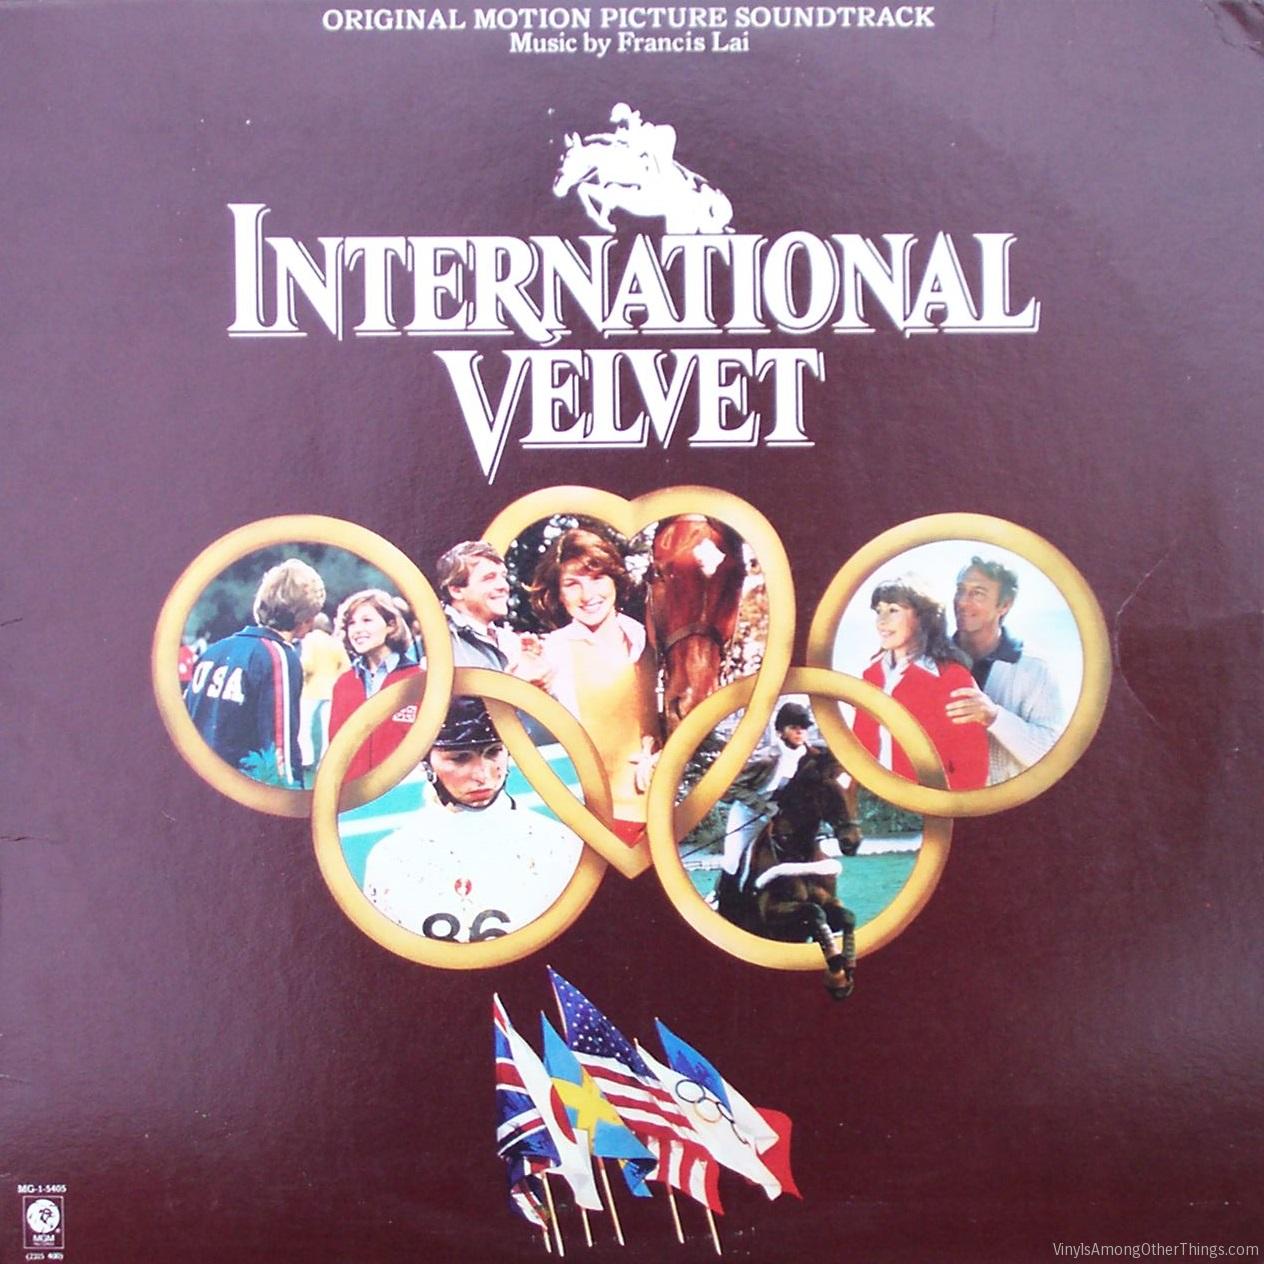 Francis Lai – “International Velvet: Original Motion Picture Soundtrack”